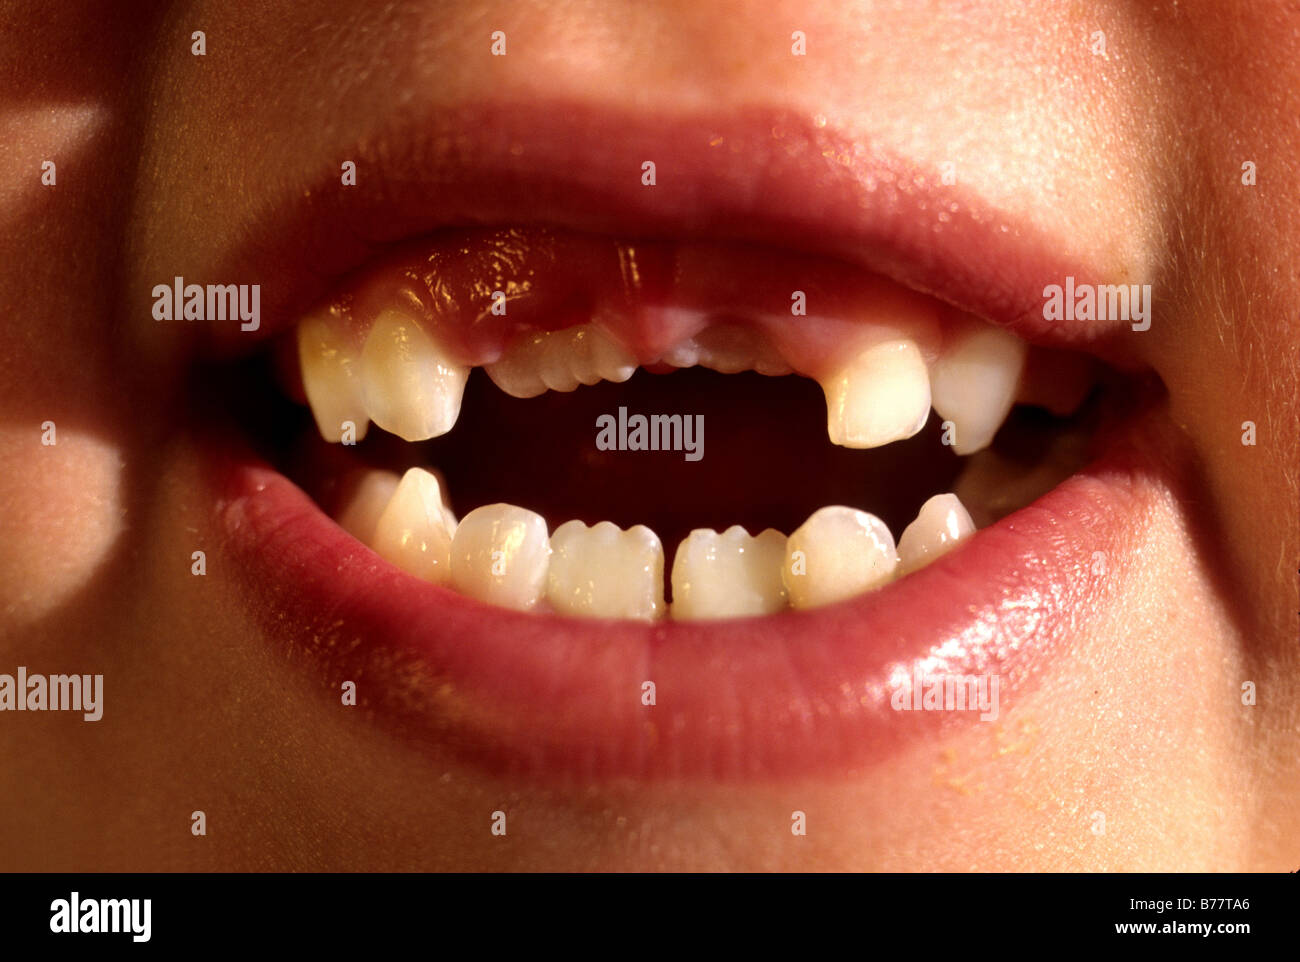 missing teeth smile model Released Stock Photo